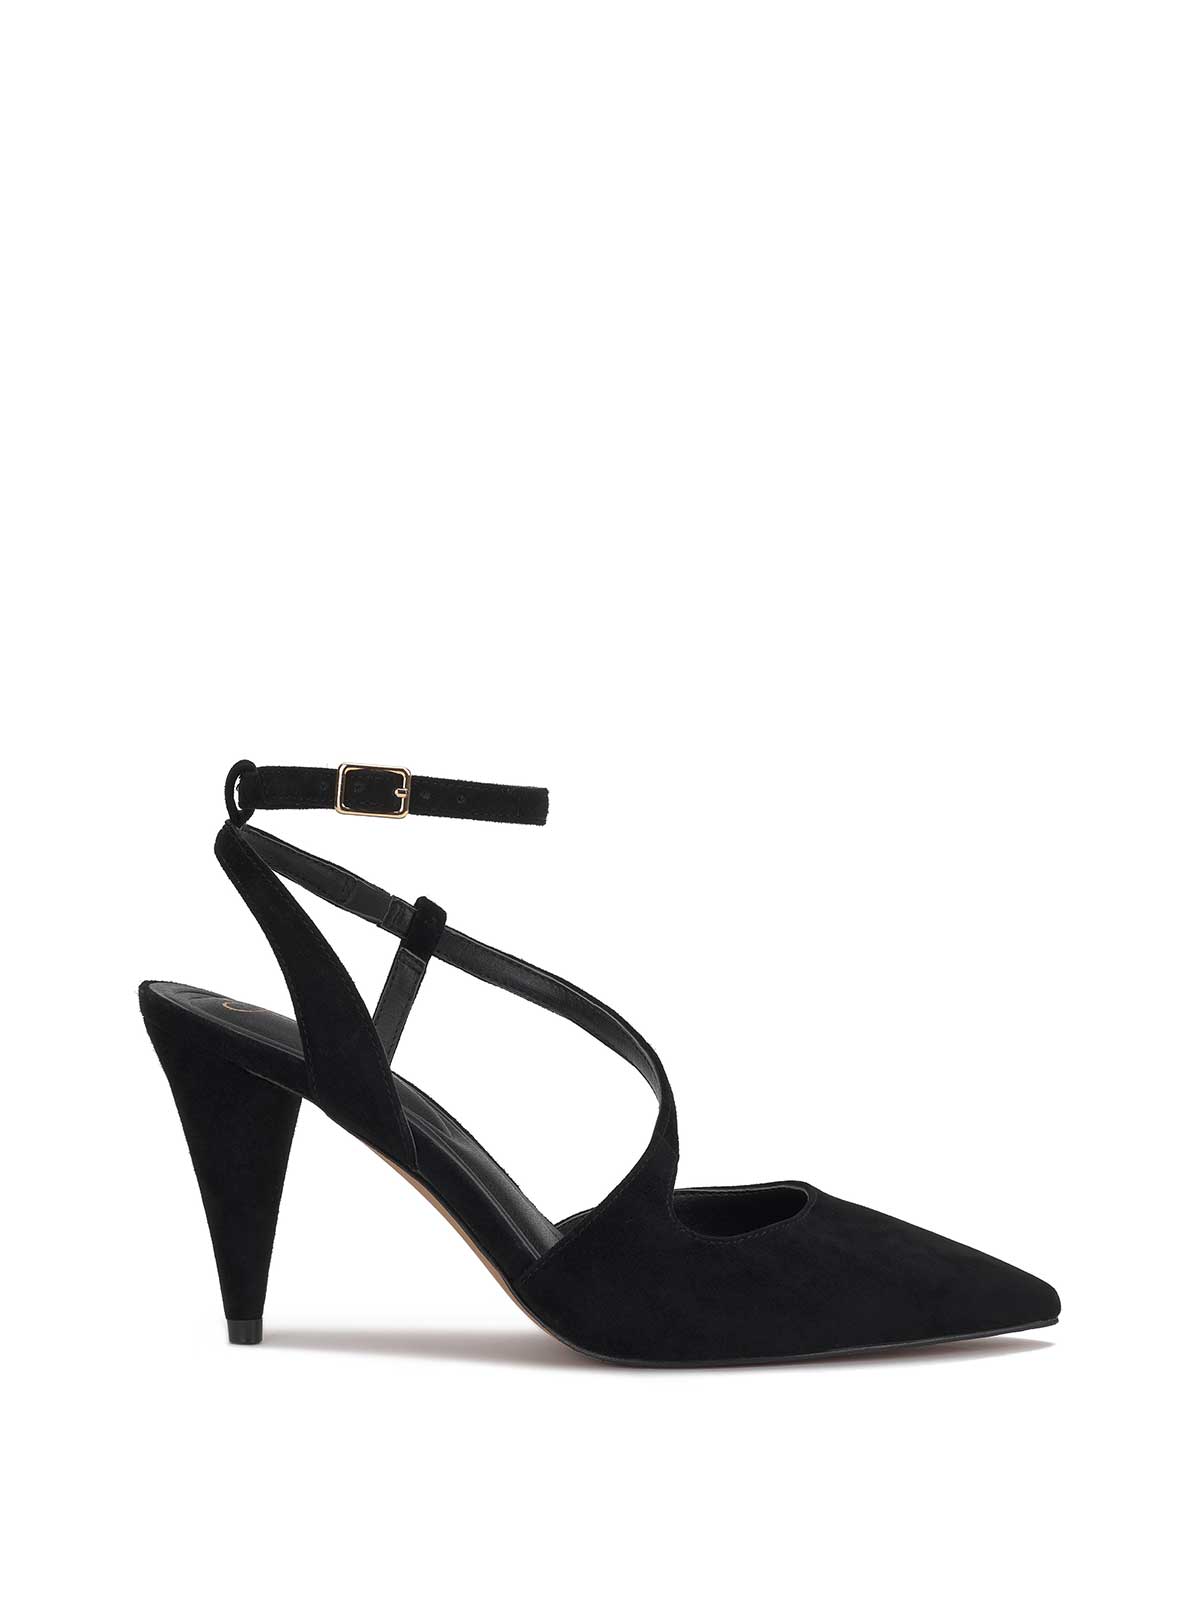 Public Desire Black Strappy Stiletto Heel Sandals | New Look